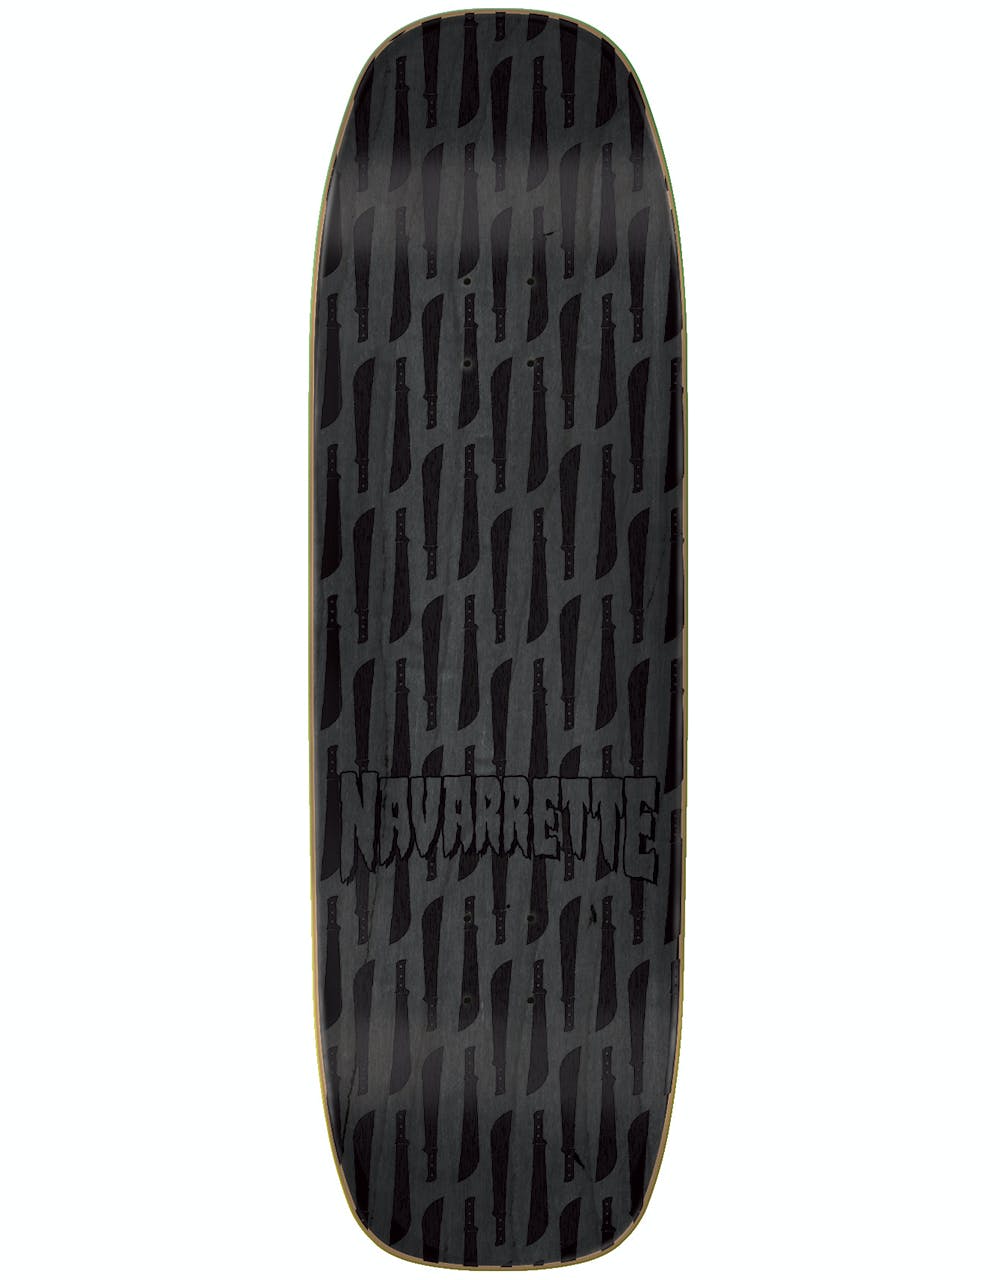 Creature Navarrette Leather Skateboard Deck - 8.8"